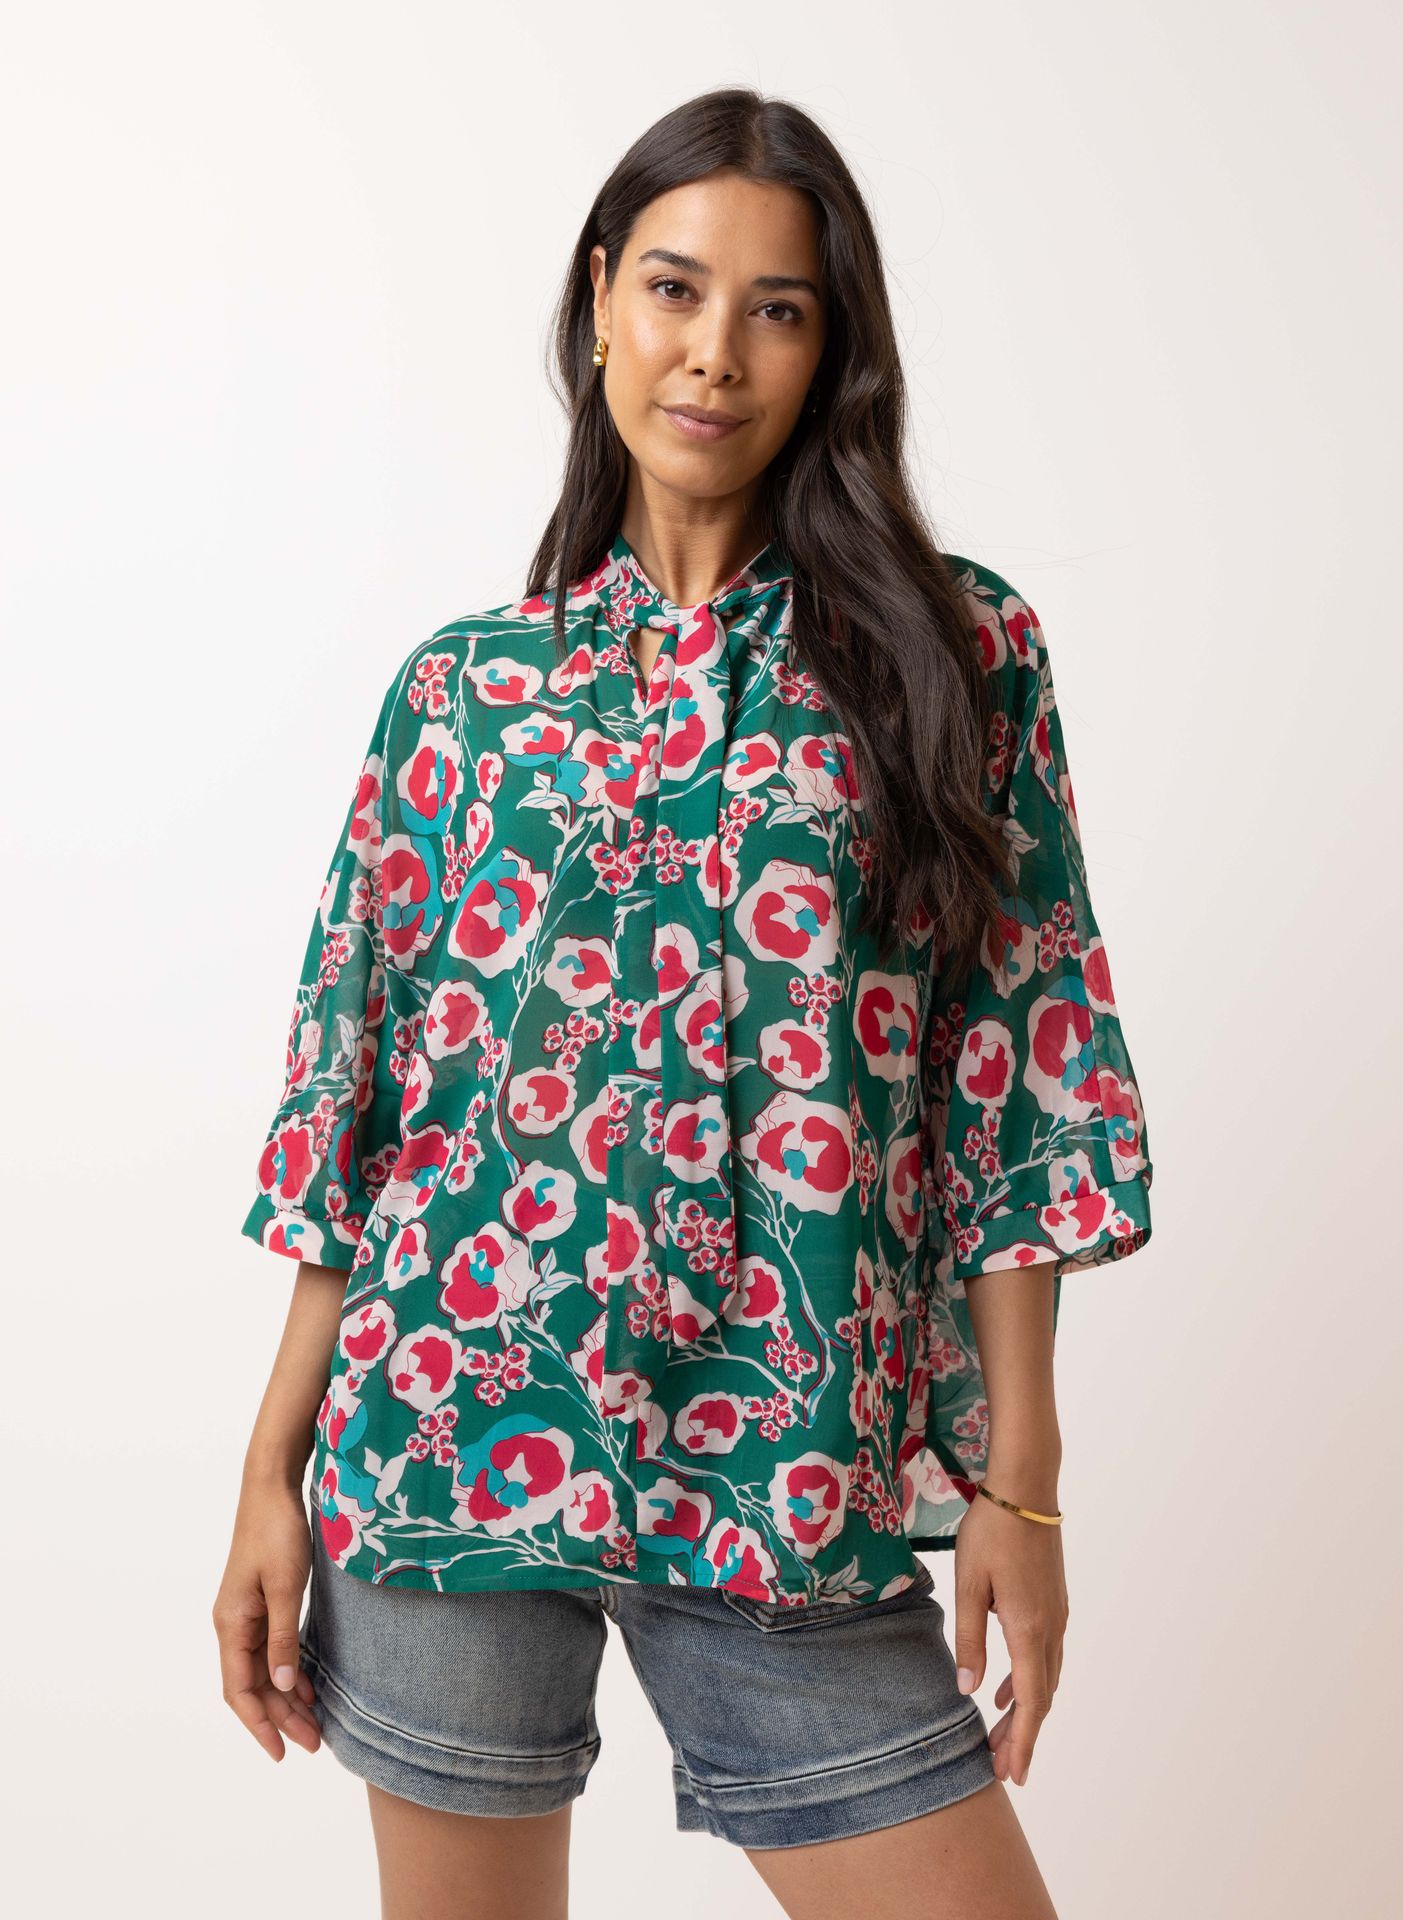 Norah Groene blouse green multicolor 214441-520